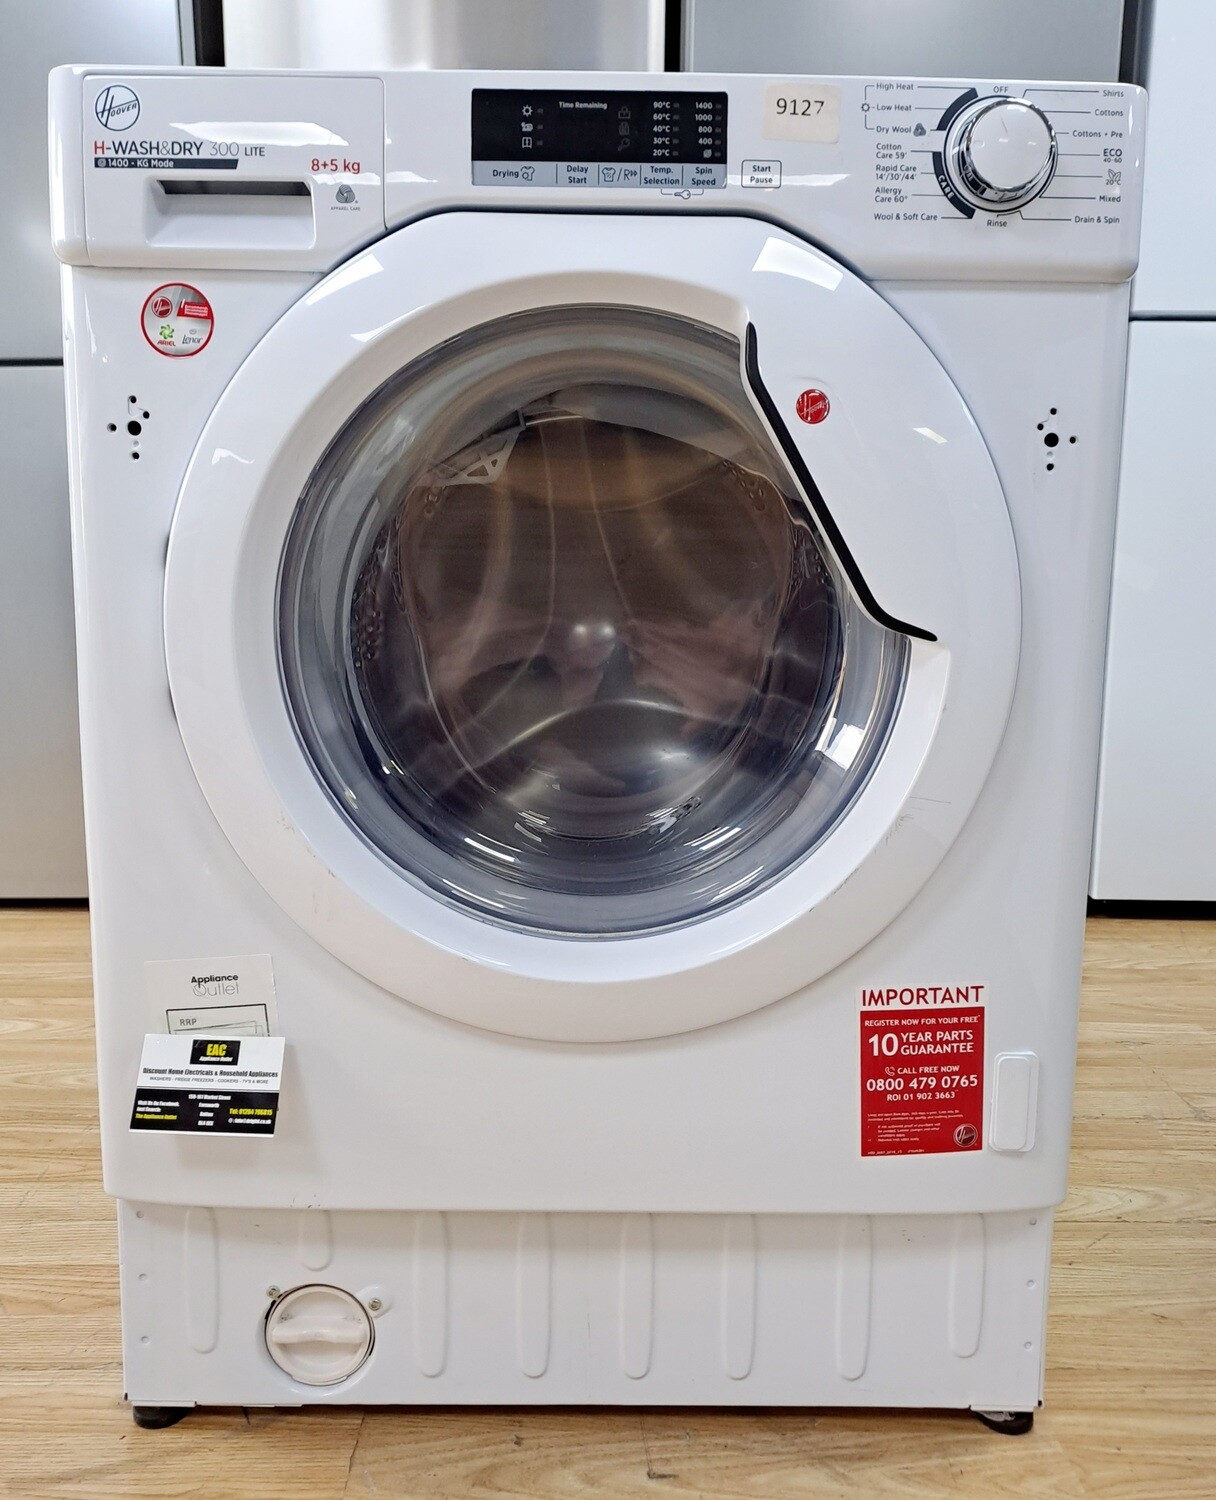 HOOVER H-Wash 300 HBD 485D2E Integrated 8/5 kg Washer Dryer - White